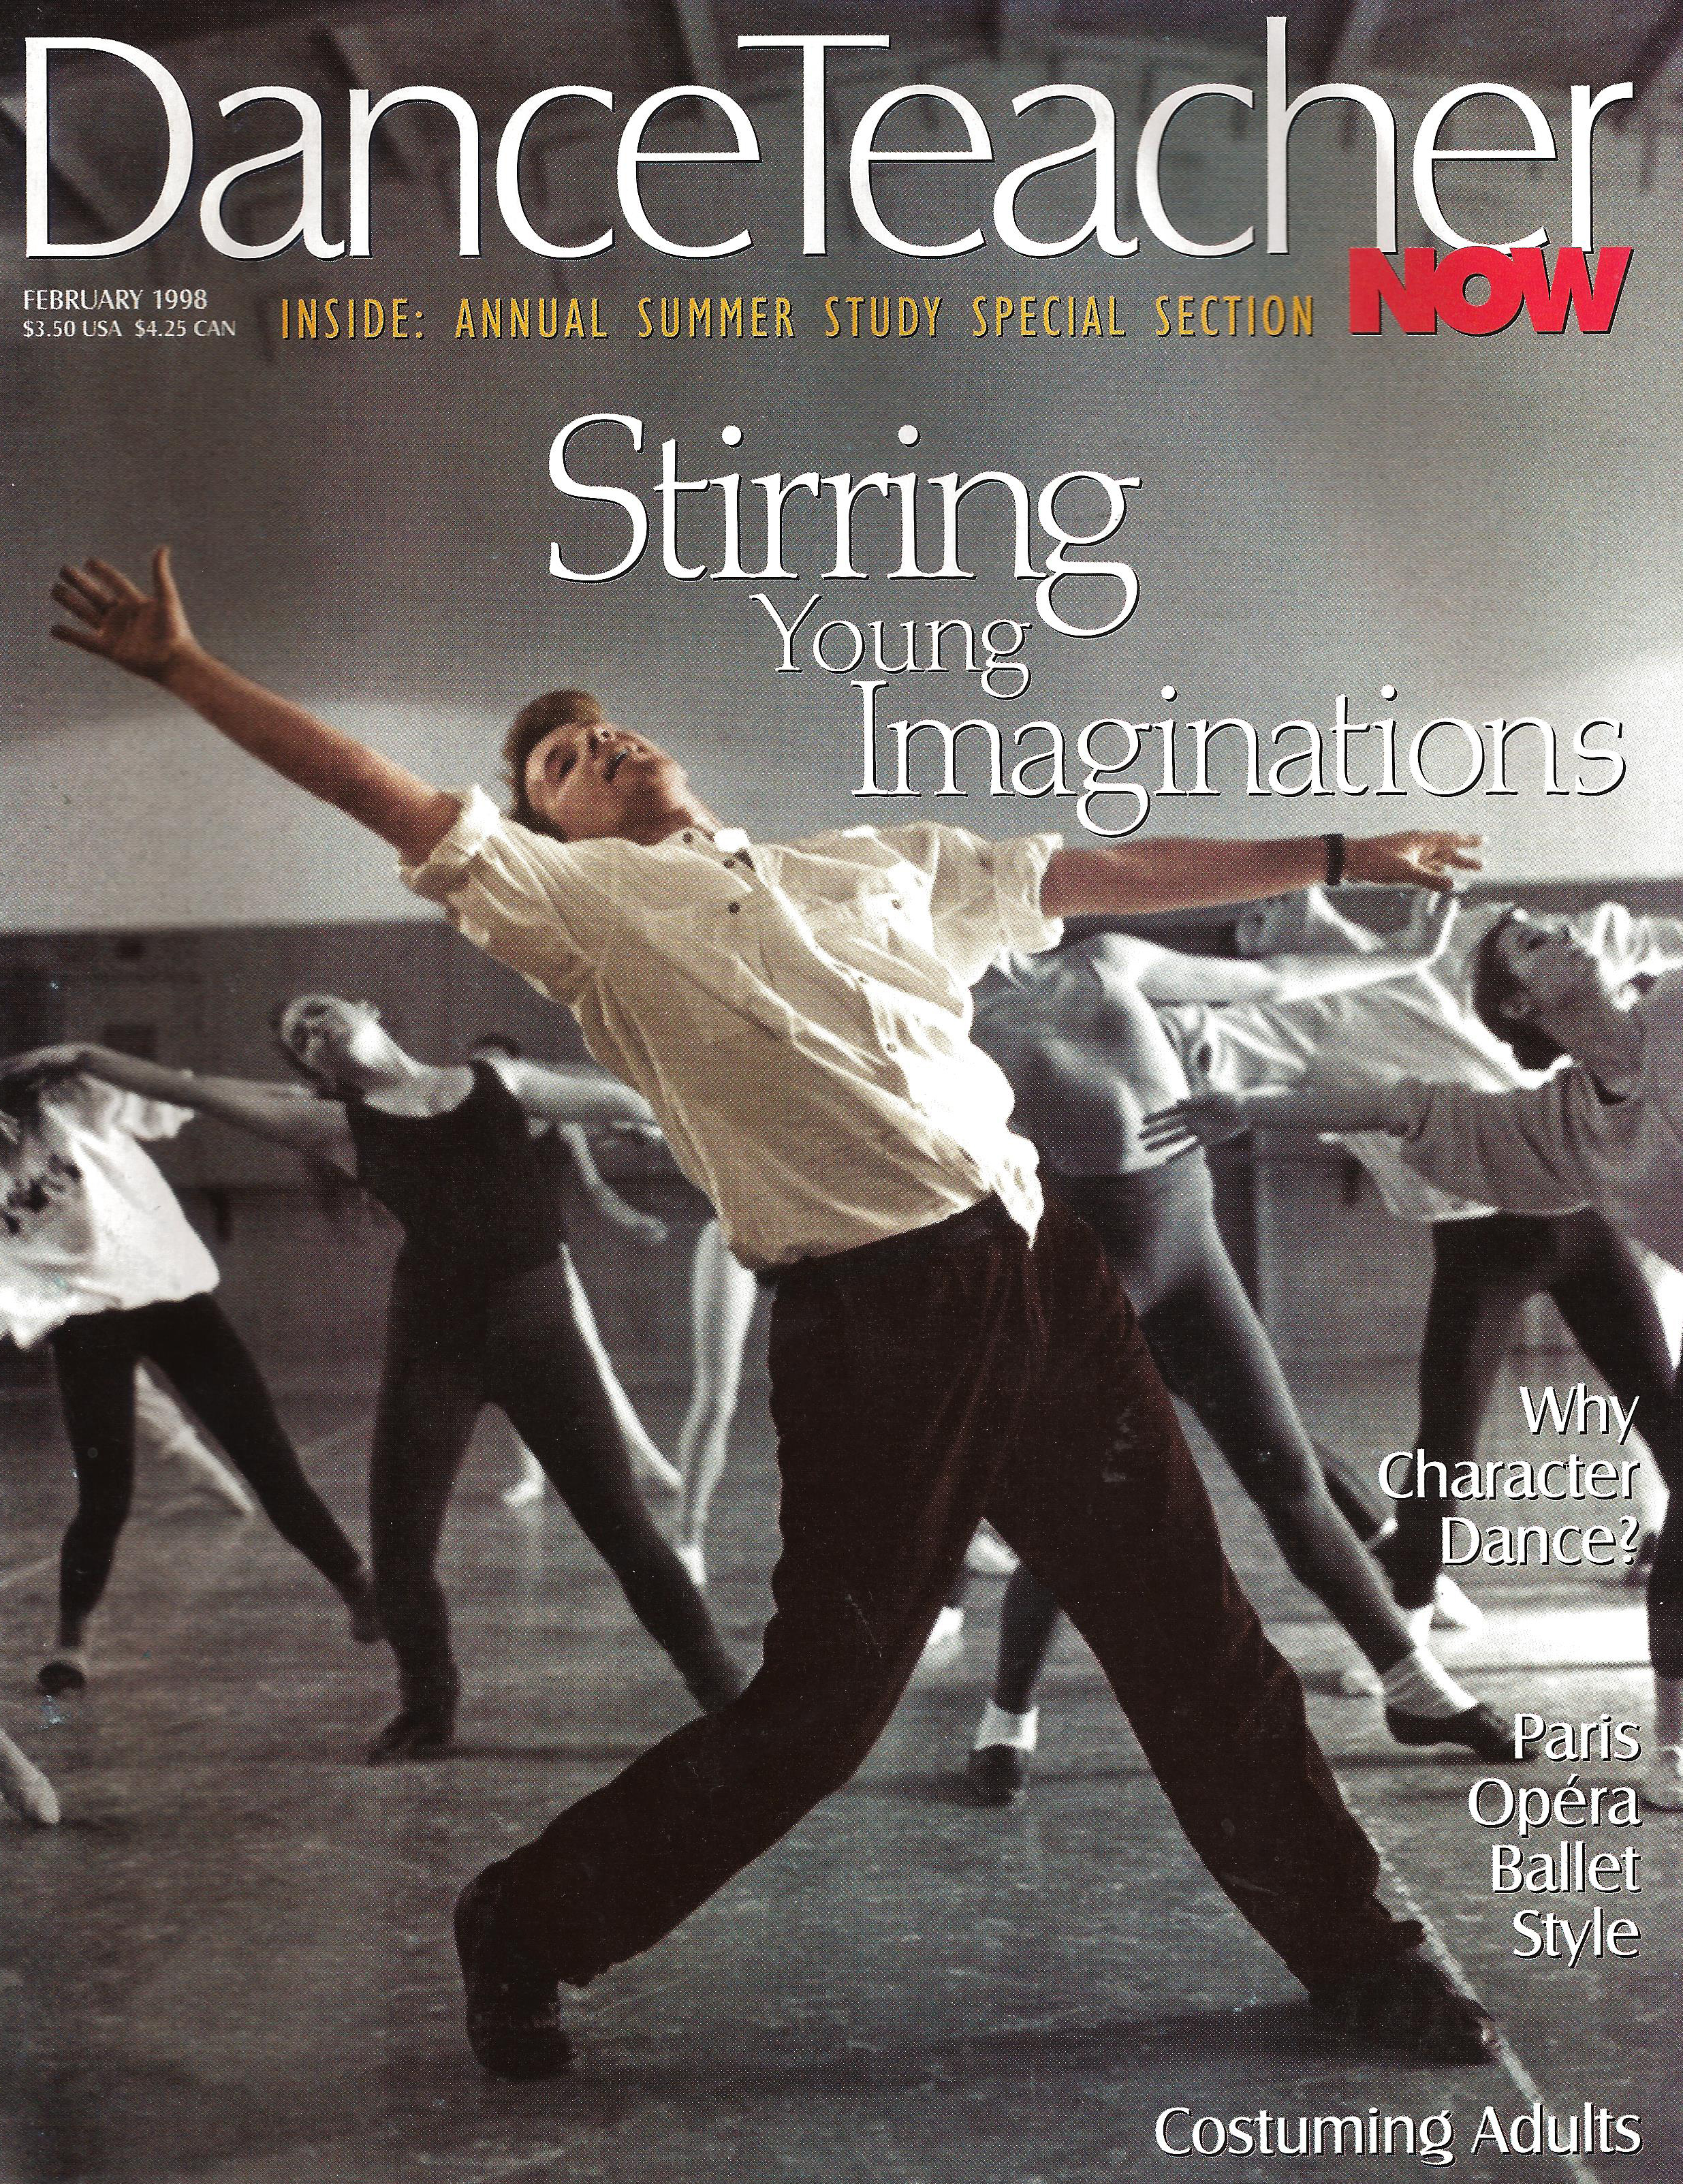 Alan Scofield Dance Magazine Cover